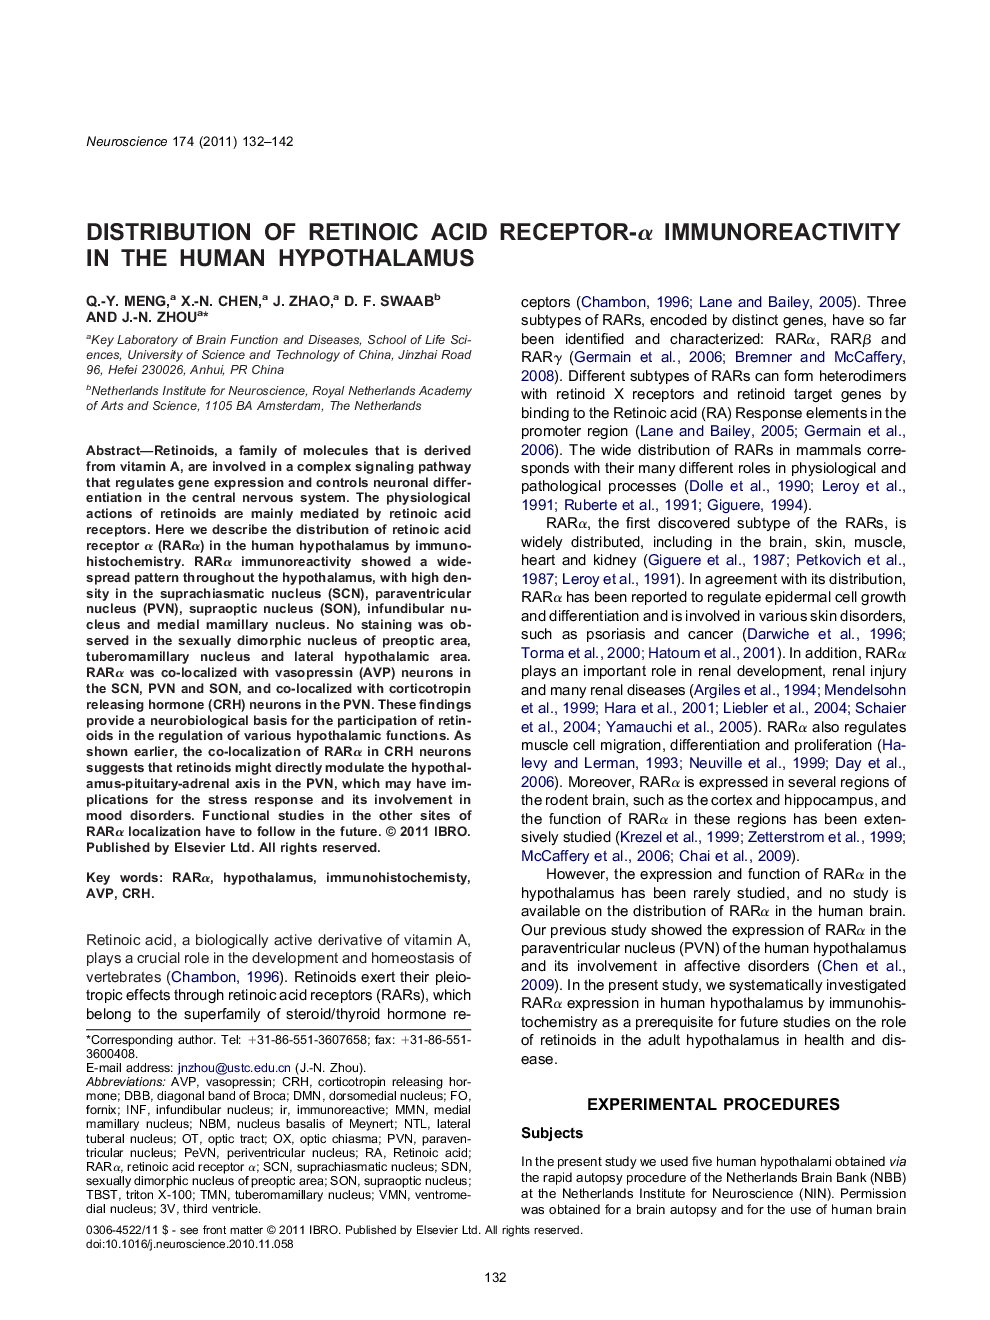 Distribution of retinoic acid receptor-α immunoreactivity in the human hypothalamus